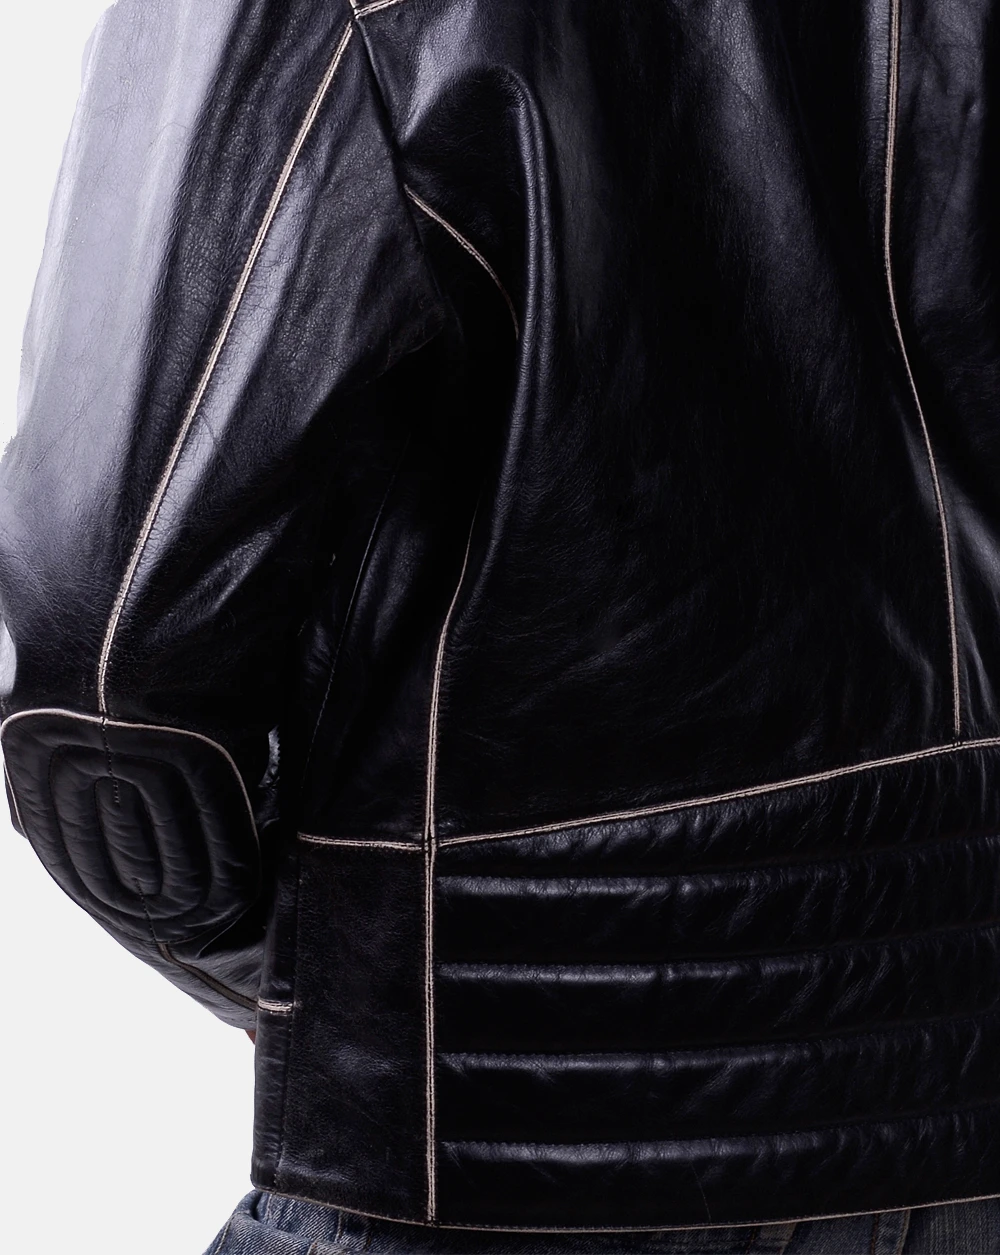 Buy Arkansas Leather Jacket